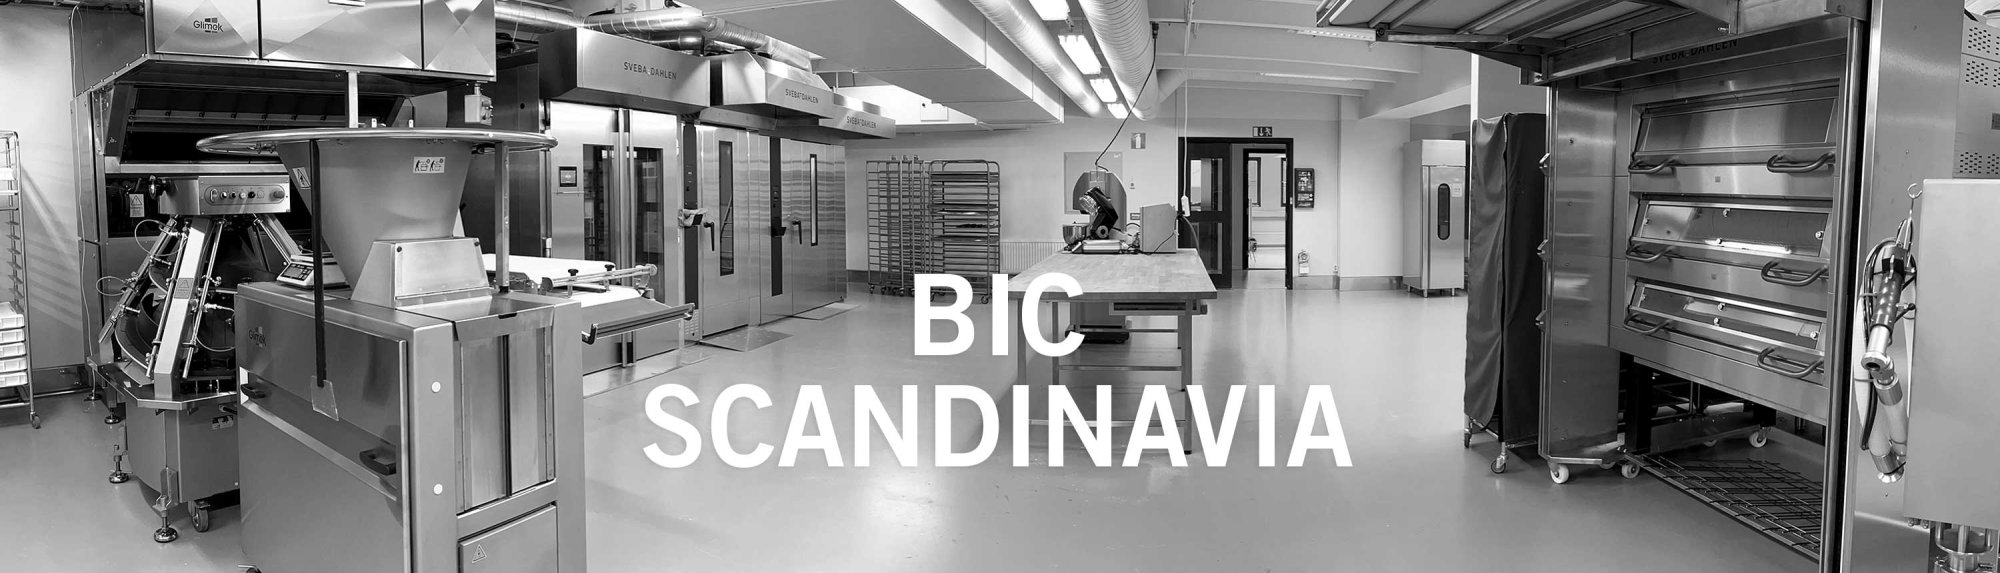 BIC Scandinavia Sveba Dahlen Ovens and Bread Lines Middleby Bakery Food Processing